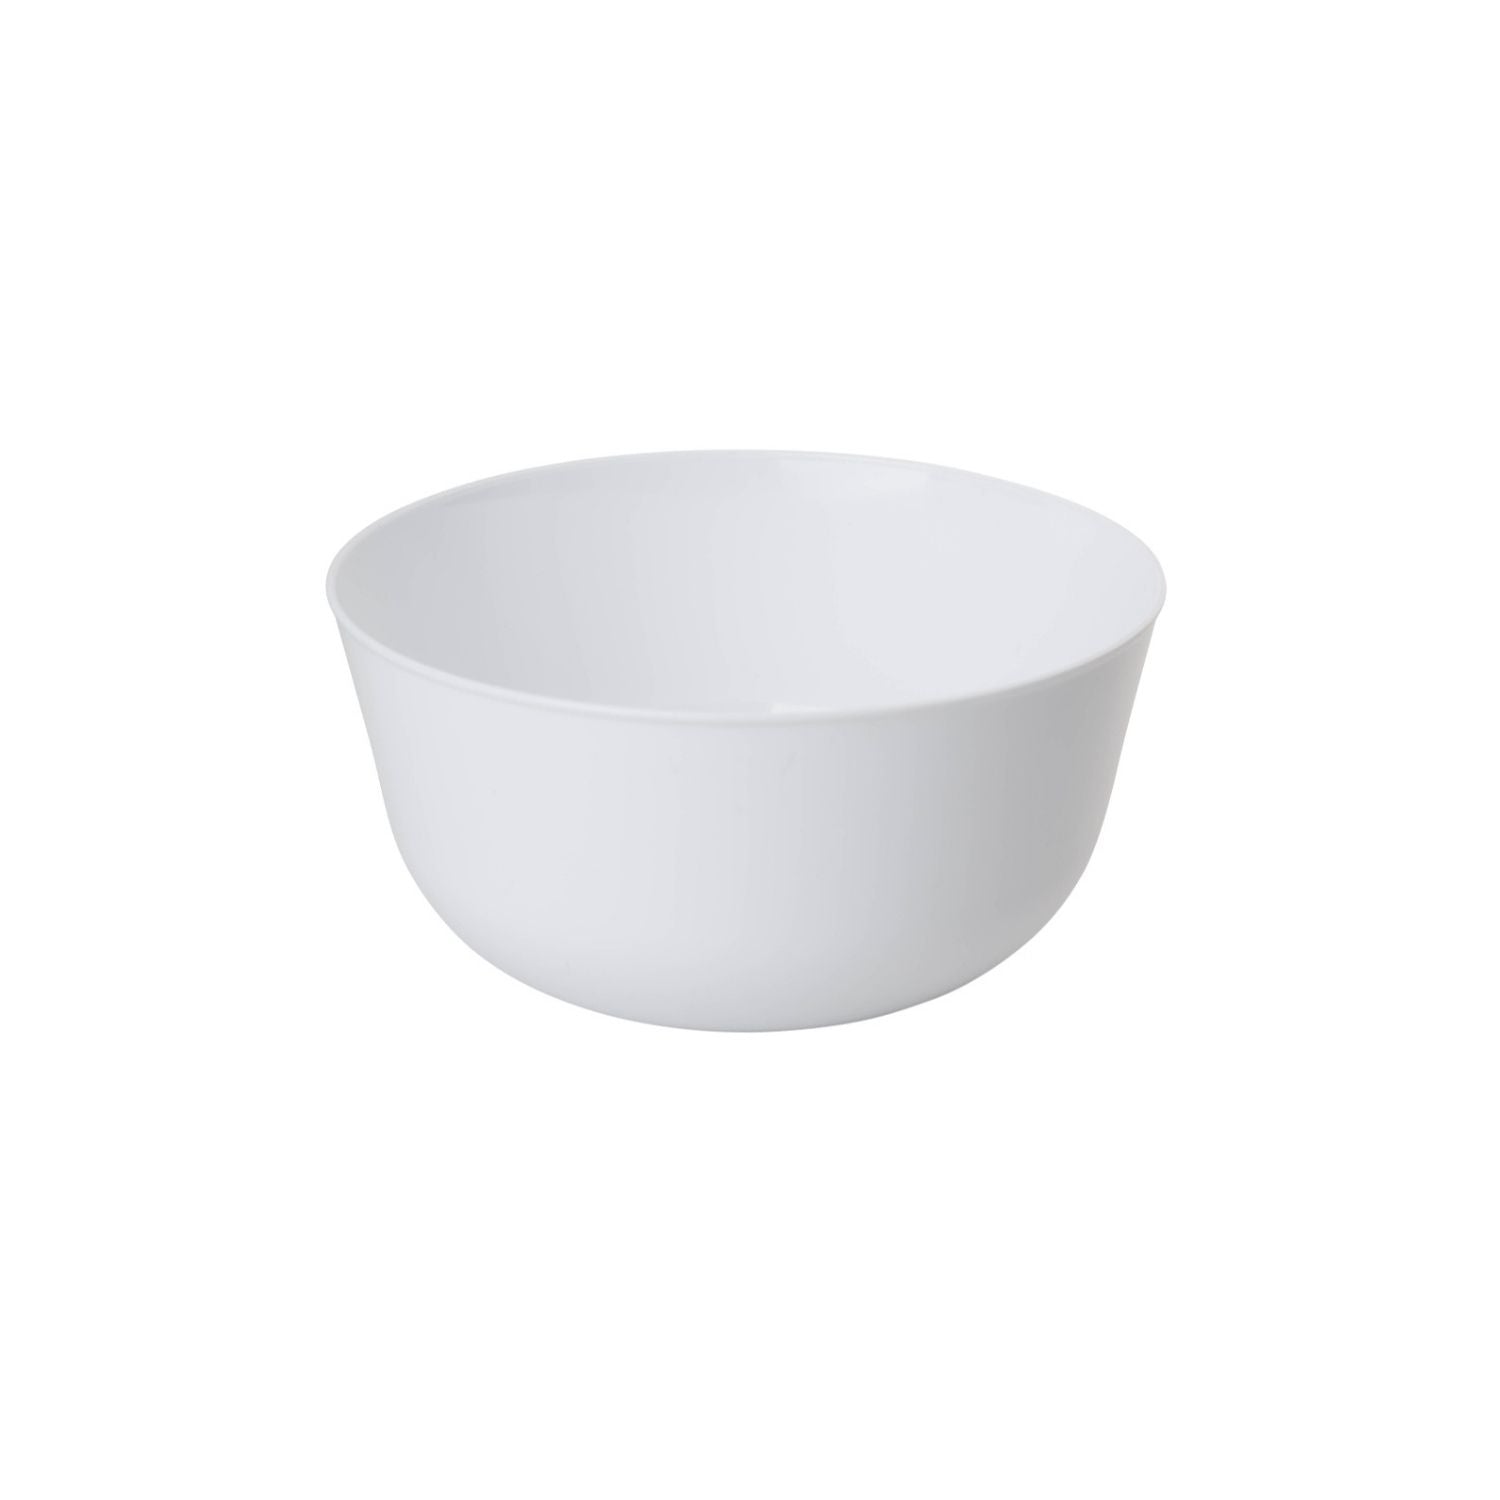 Trend White Plastic Bowls (40 Count) - Yom Tov Settings